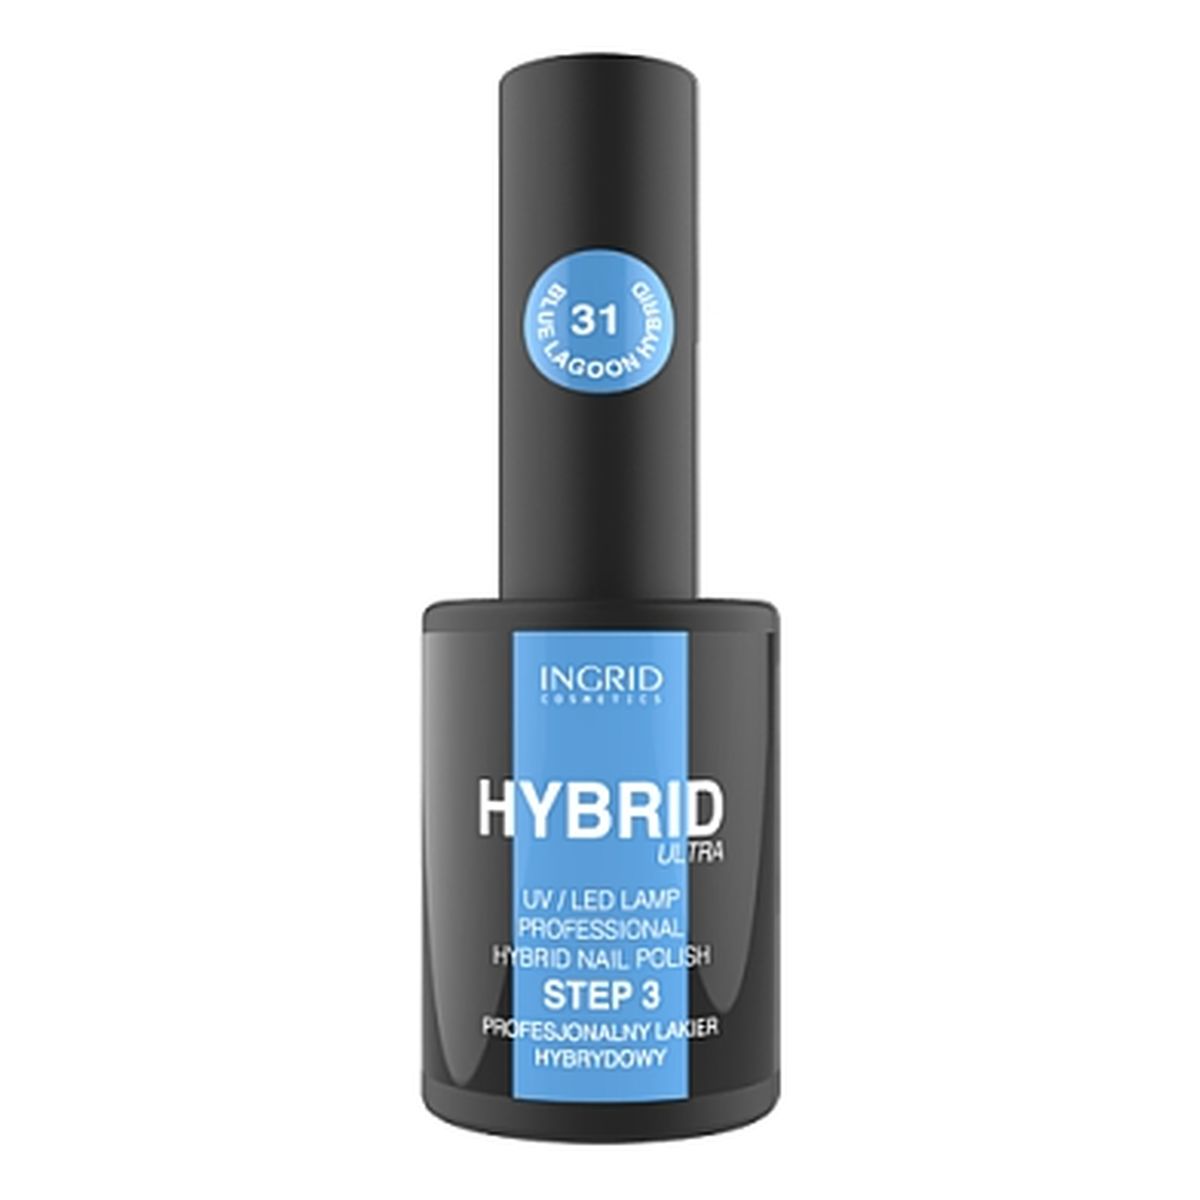 Ingrid Hybrid Ultra lakier hybrydowy do paznokci 7ml